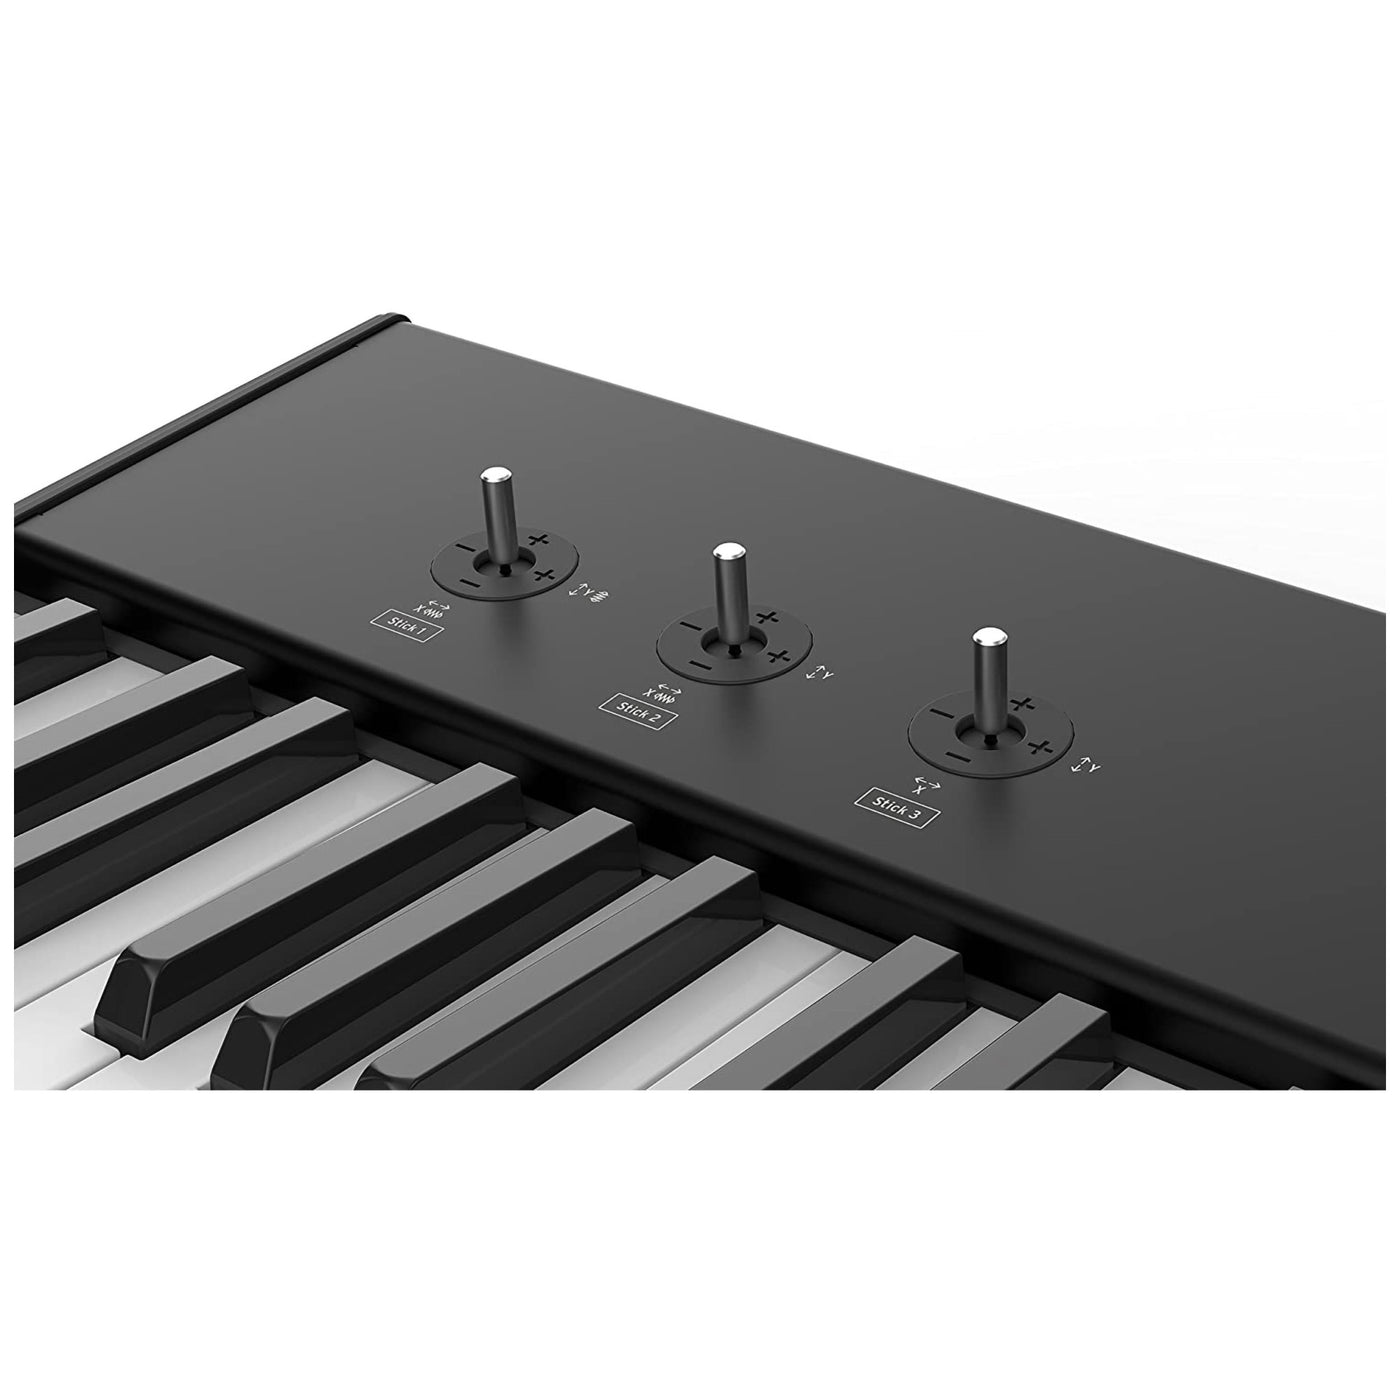 Studiologic SL73 Studio 73-Key MIDI Keyboard Controller